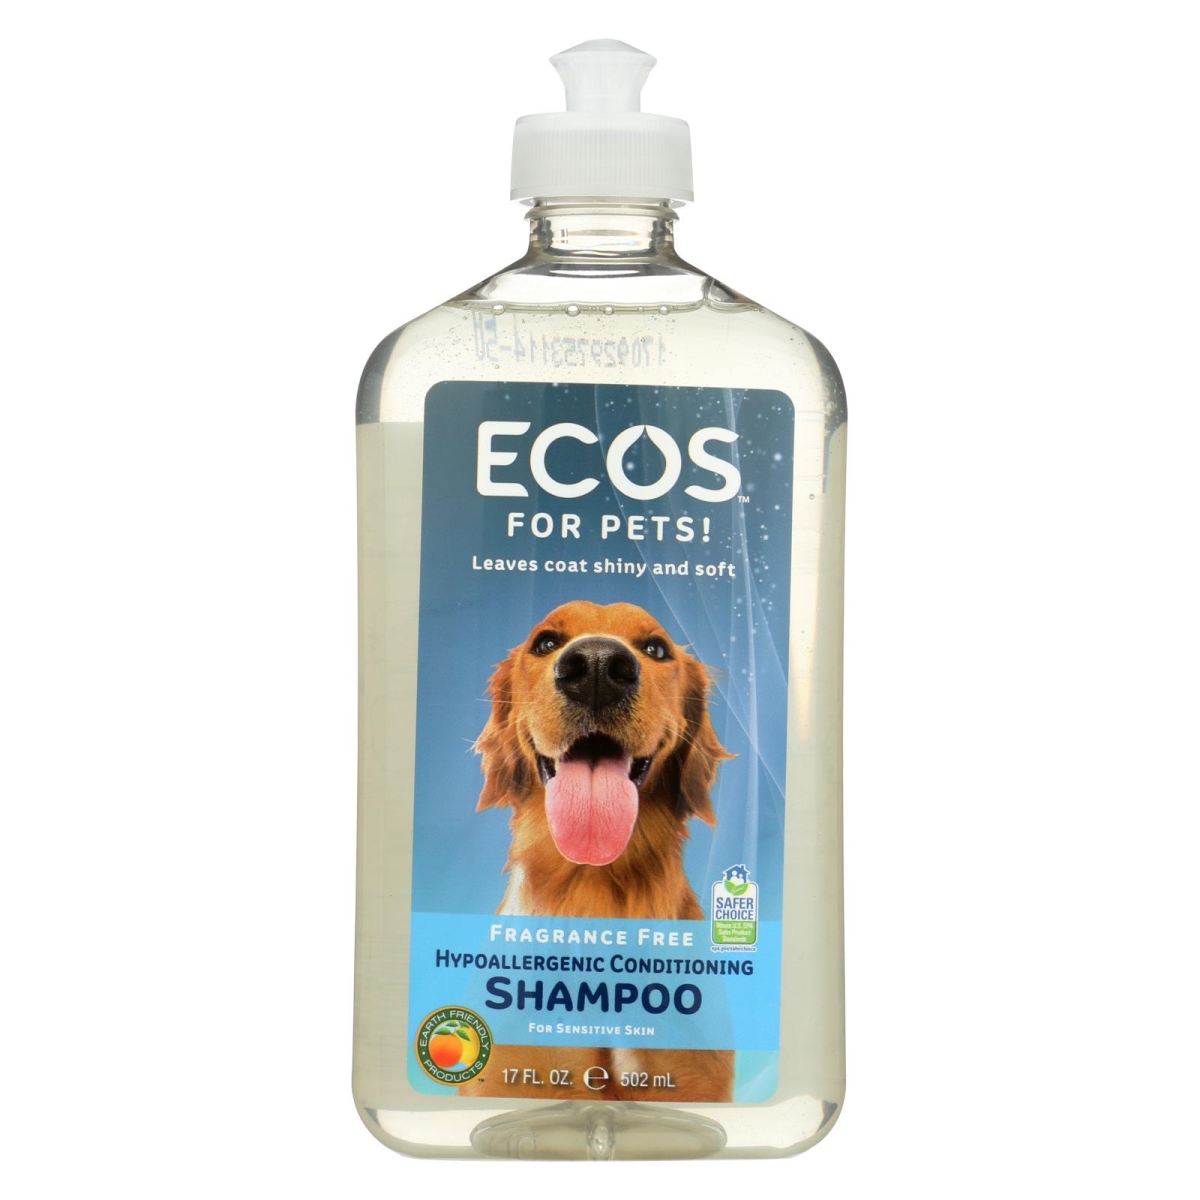 1796358 17 Fl Oz Hypoallergenic Conditioning Pet Shampoo - Fragrance Free